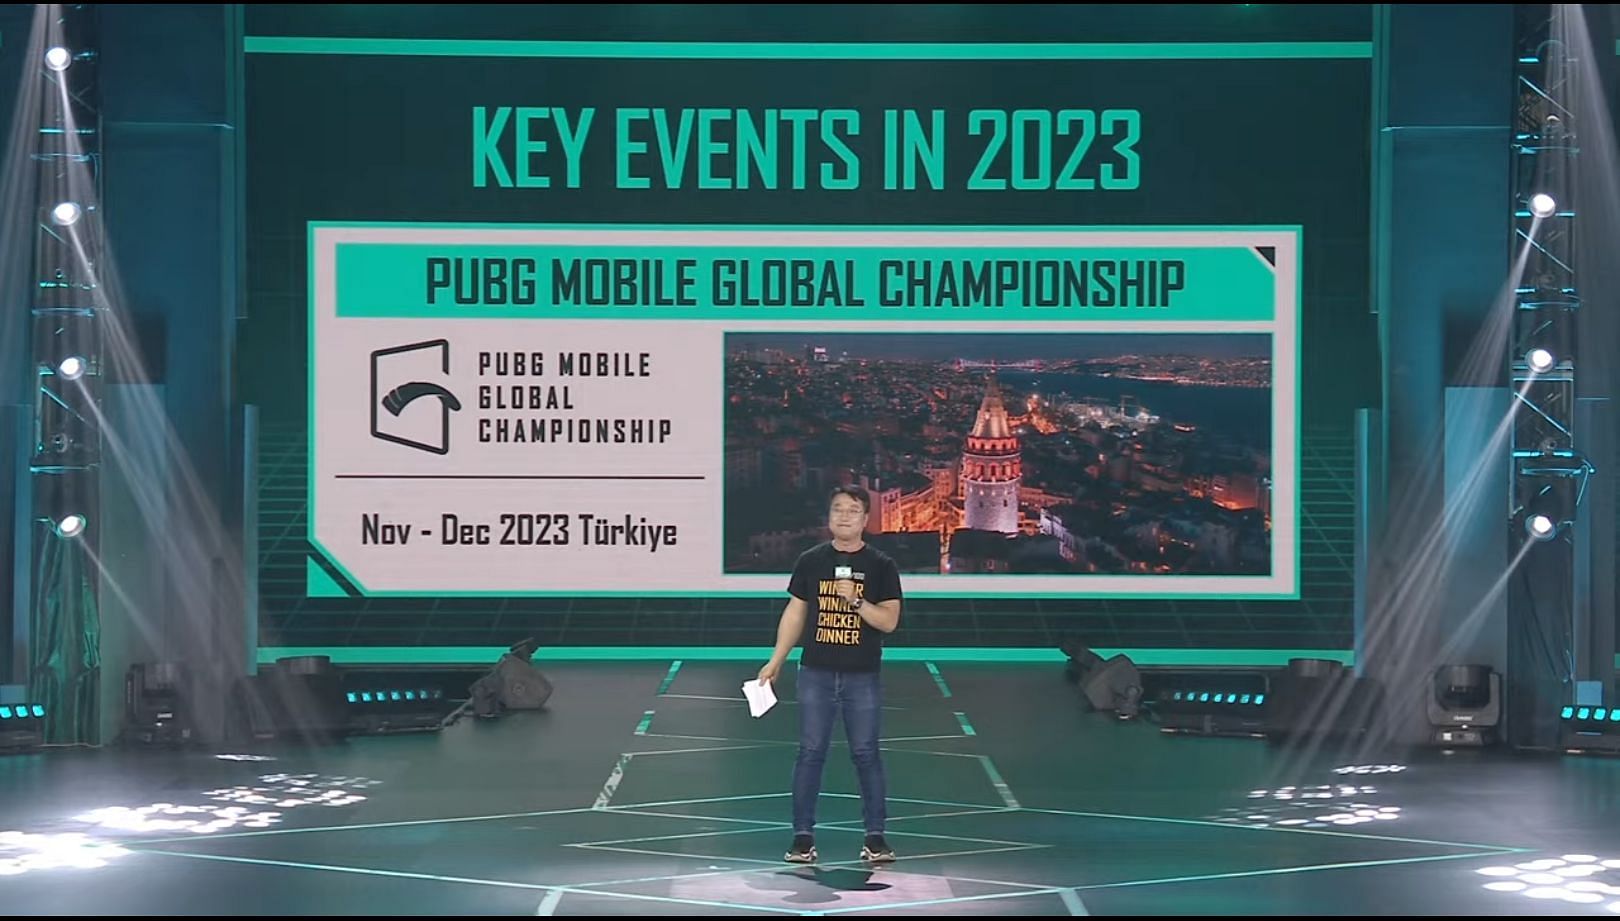 Global Championship 2023 will be held in Turkey (image via Krafton)